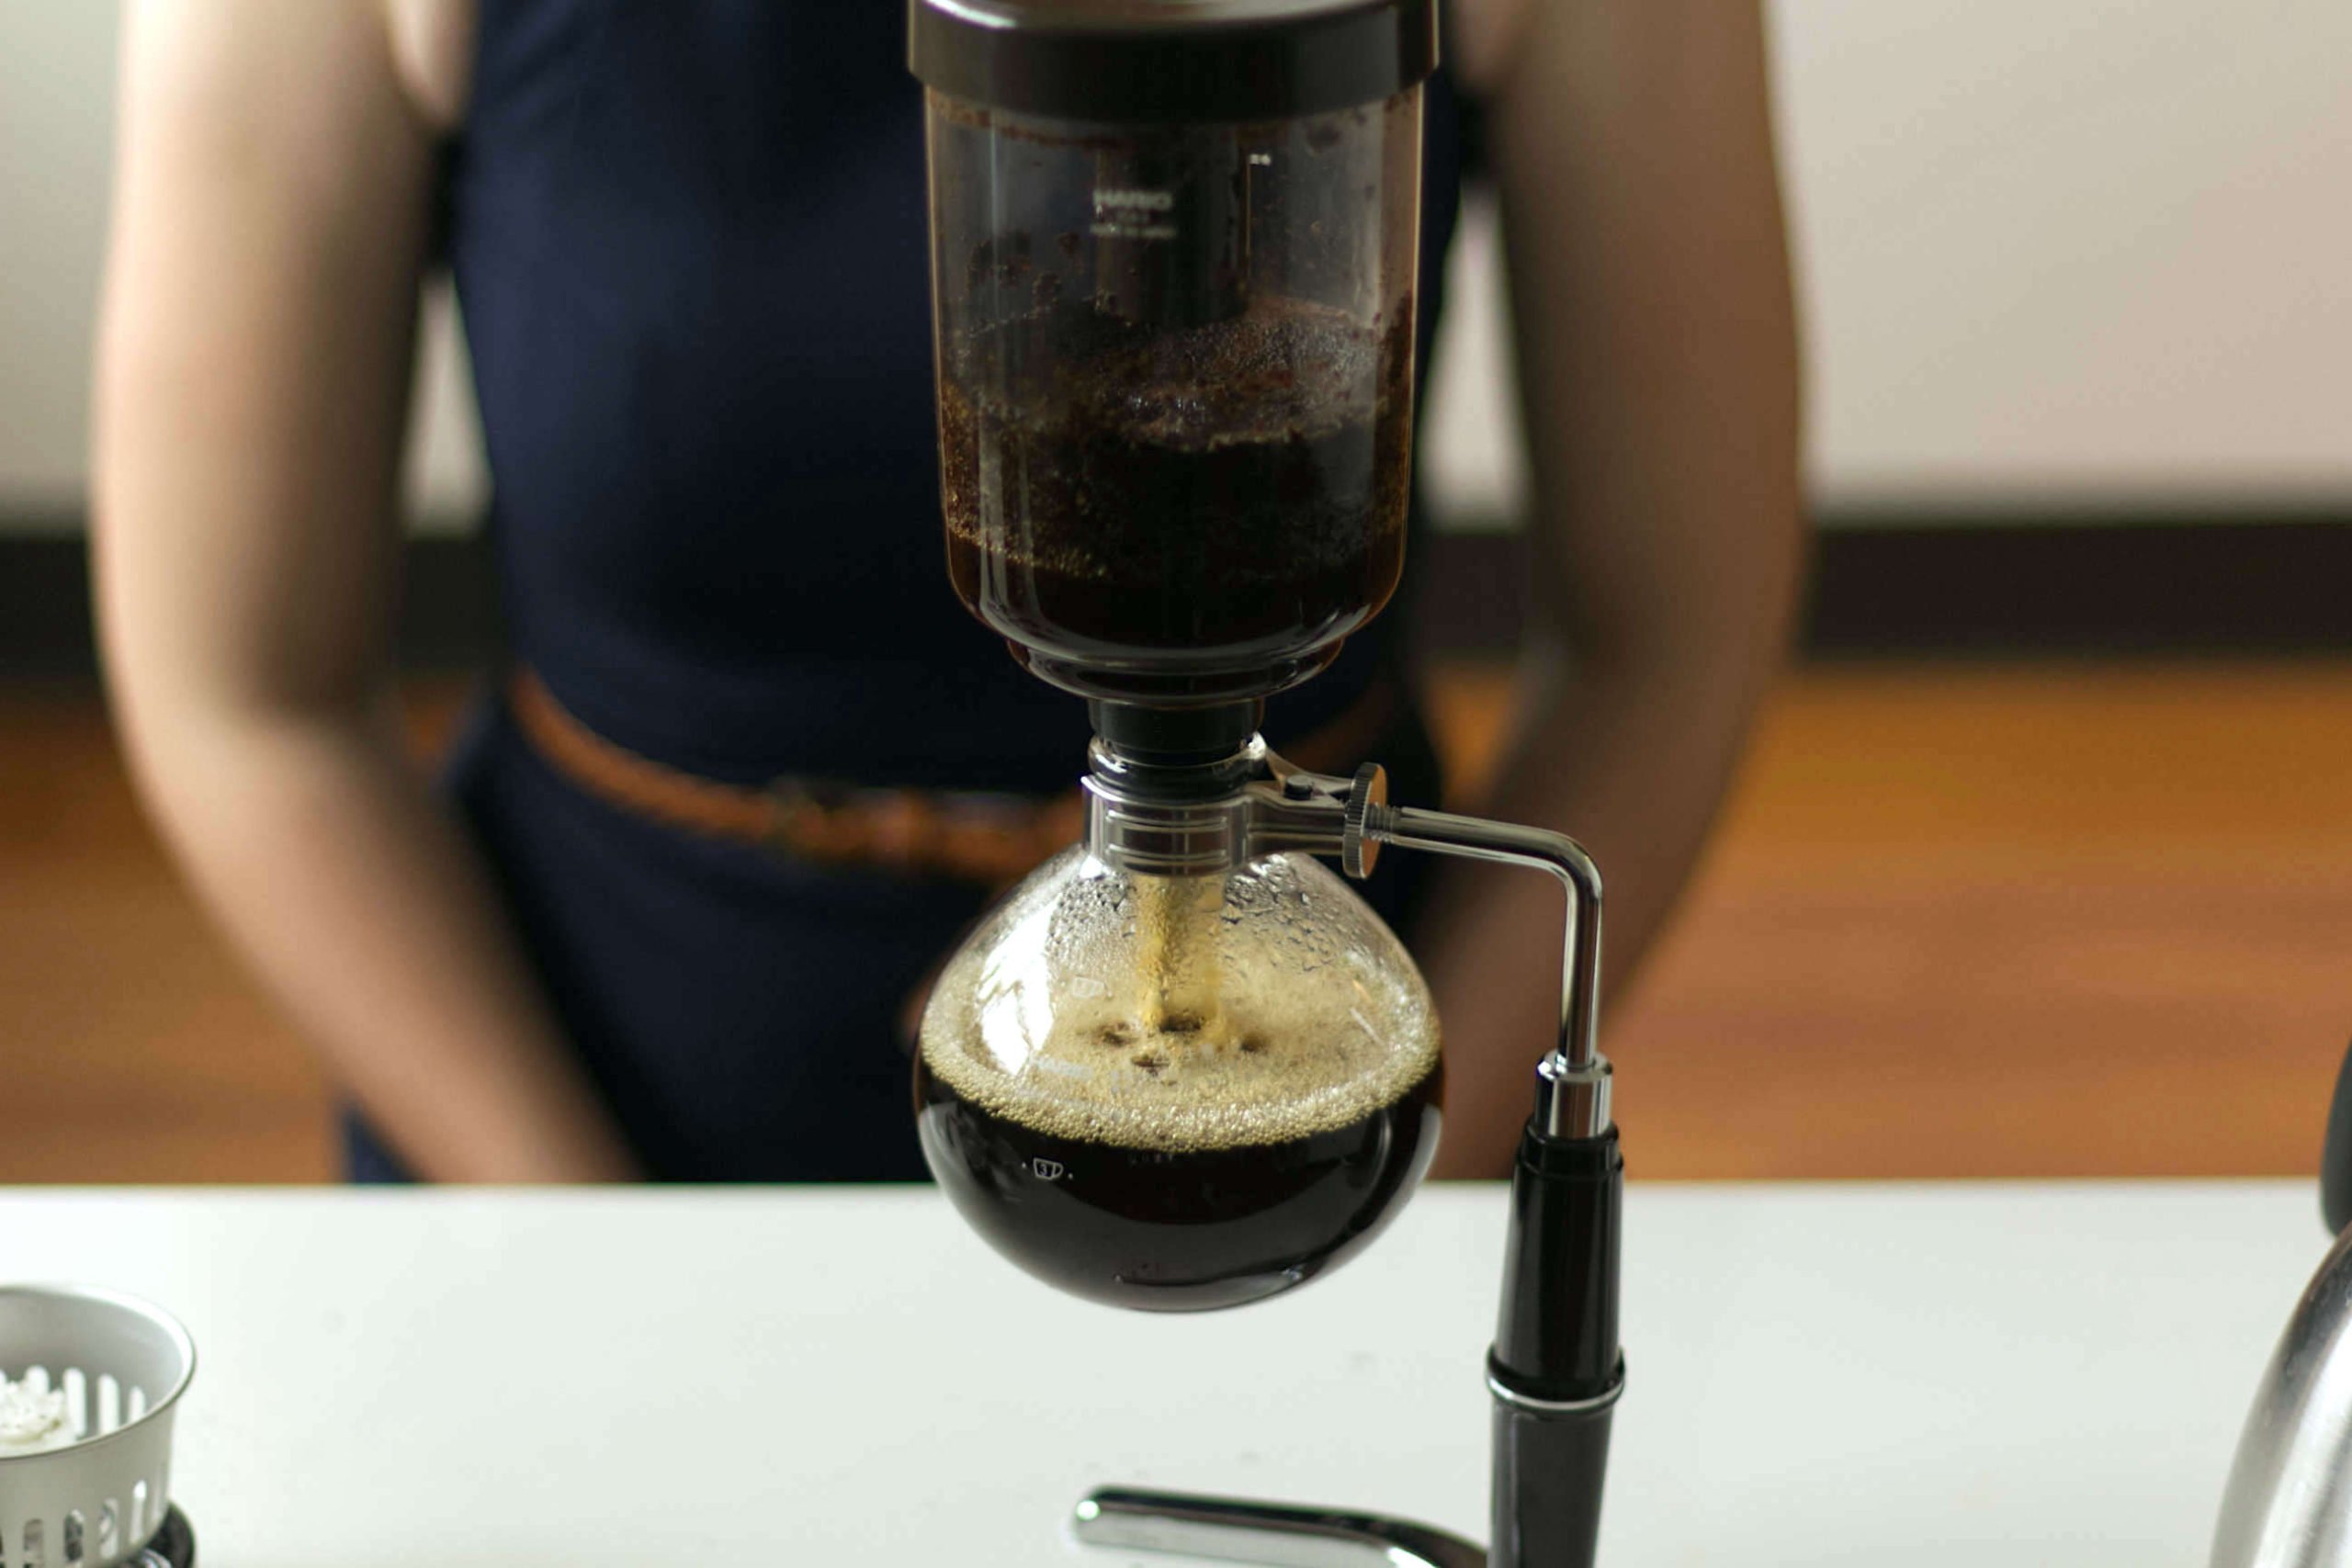 https://camanoislandcoffee.com/wp-content/uploads/2014/06/Syphon-Coffee-scaled.jpg